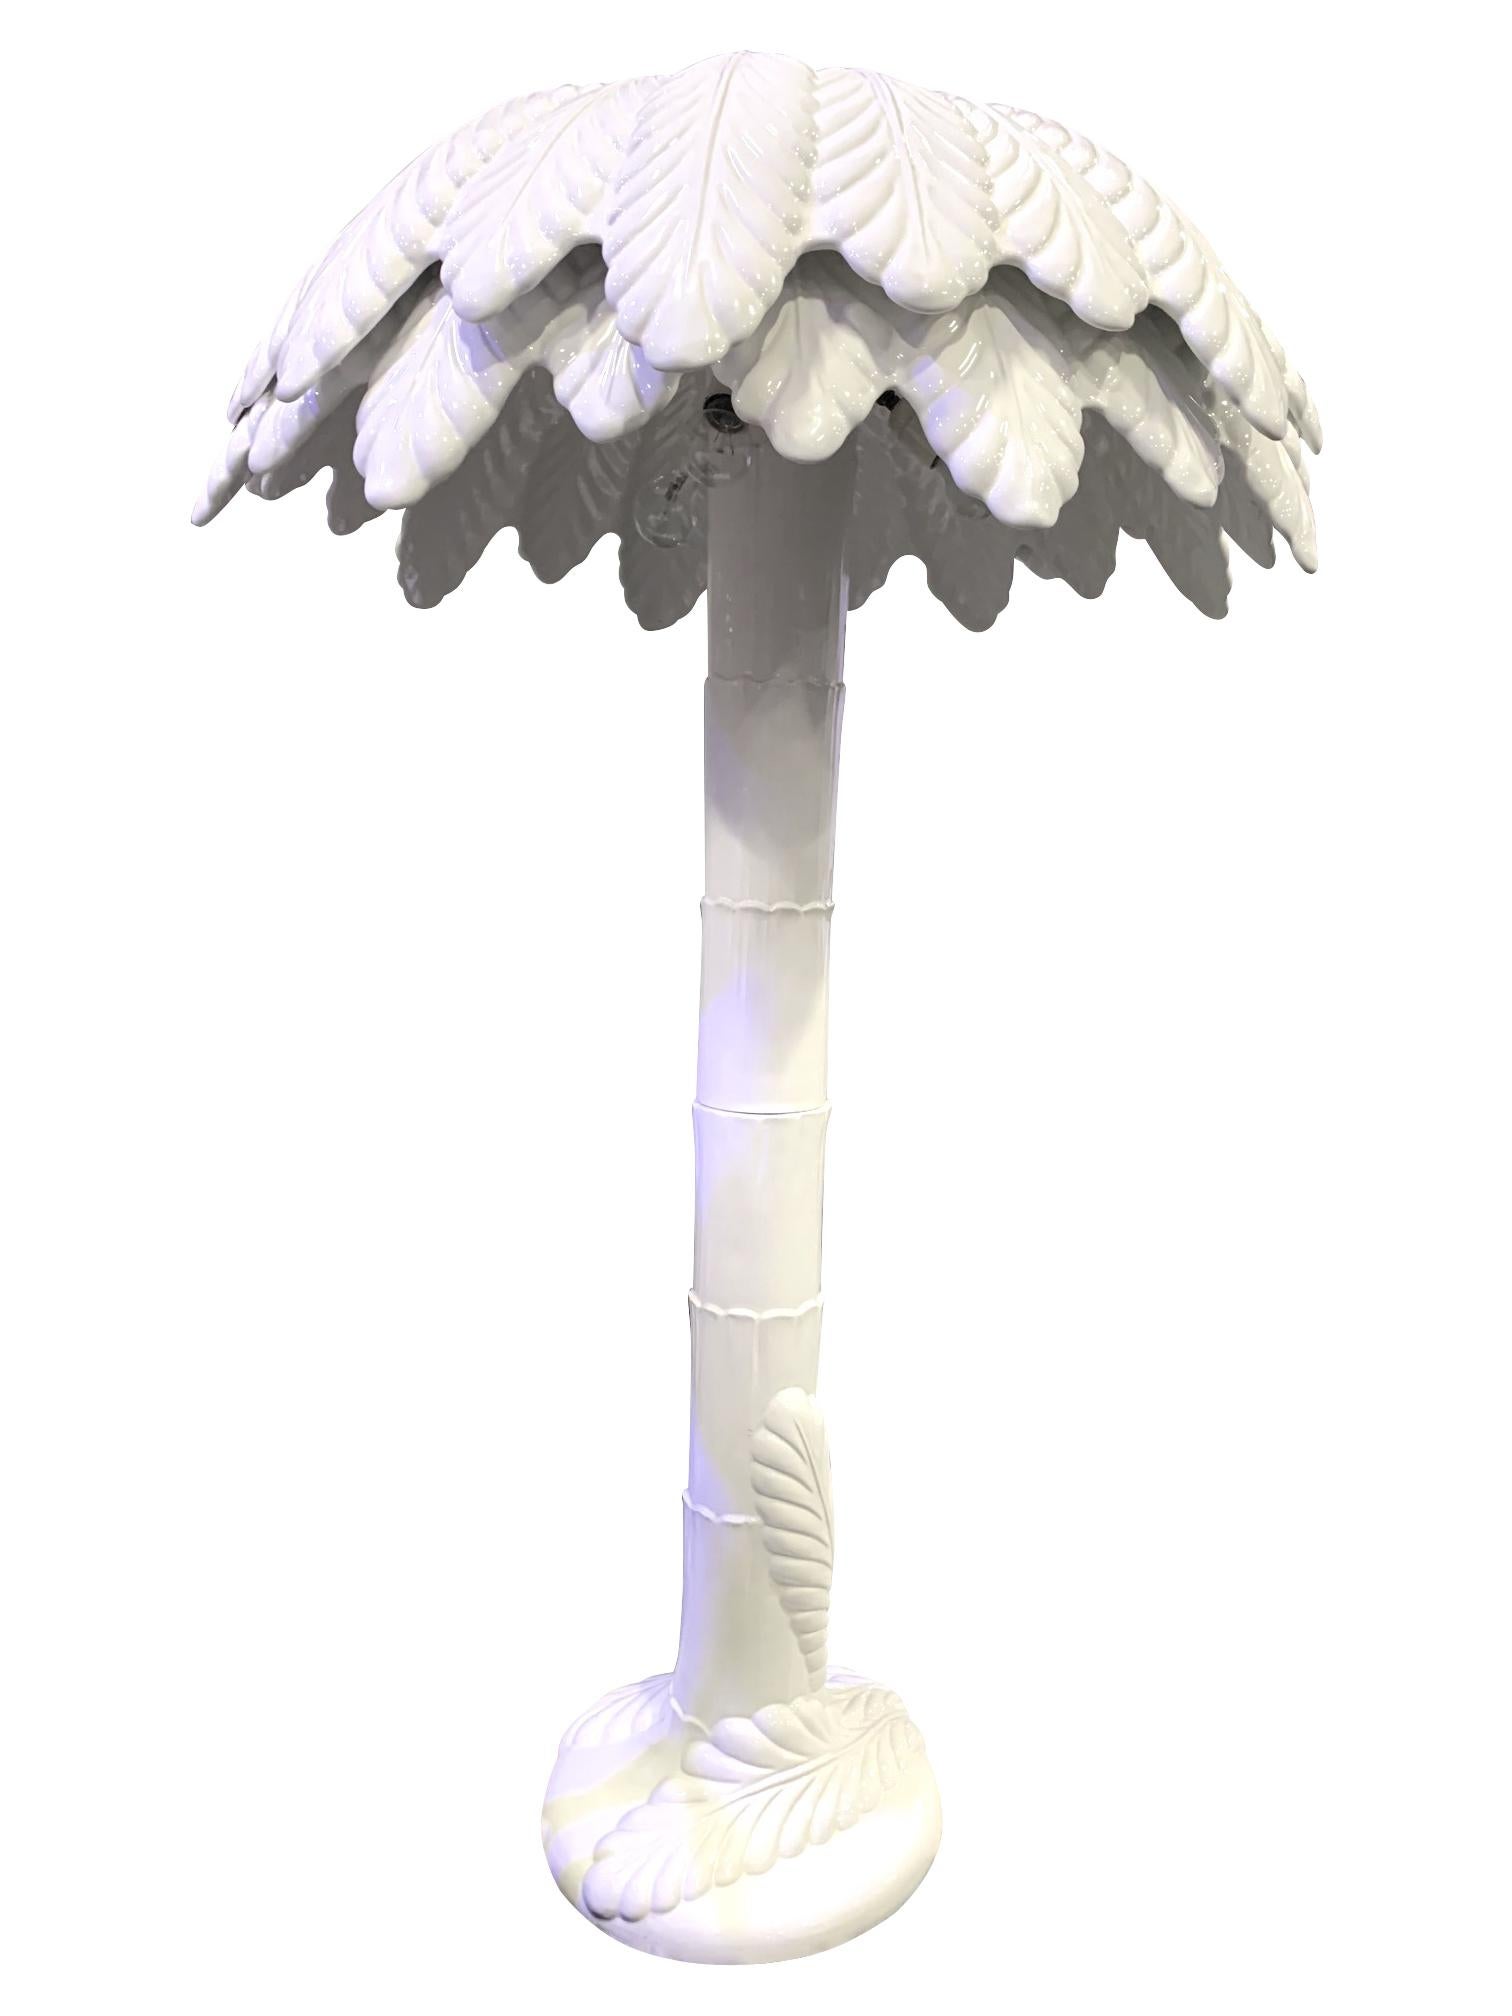 white palm tree lamp